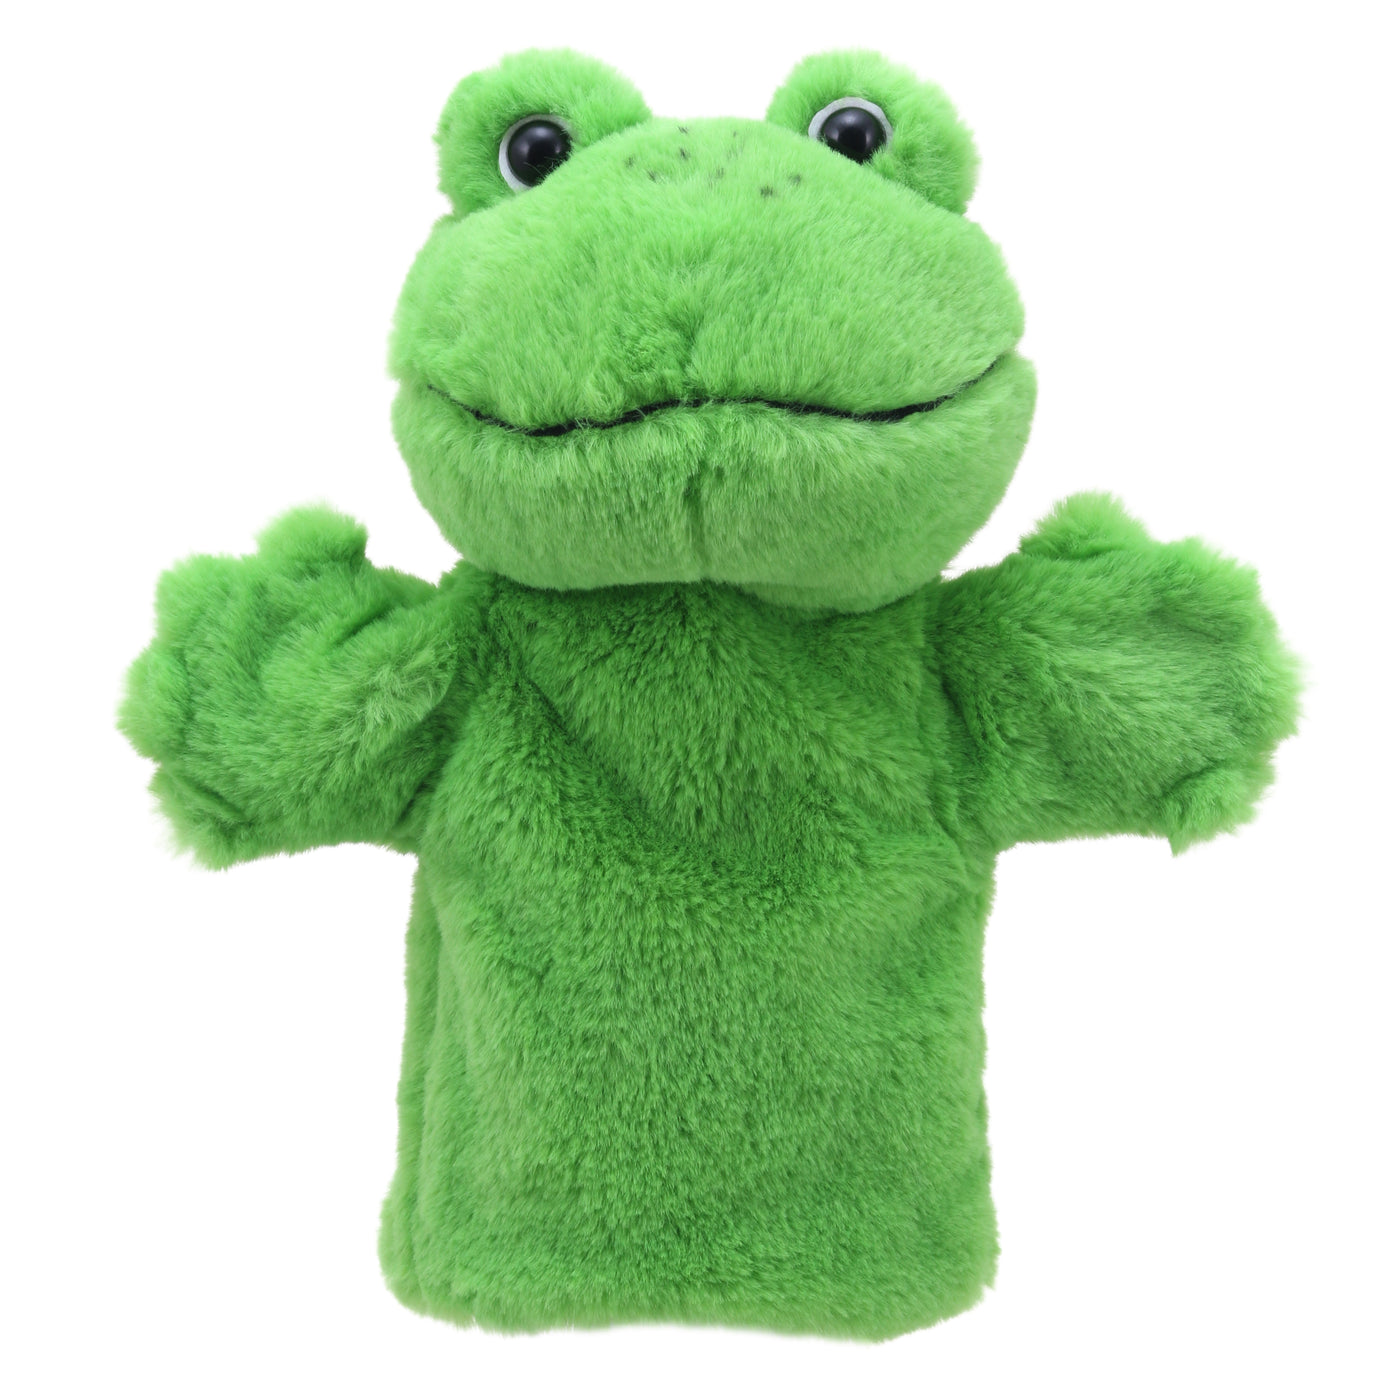 Eco Puppet Buddies - Frog